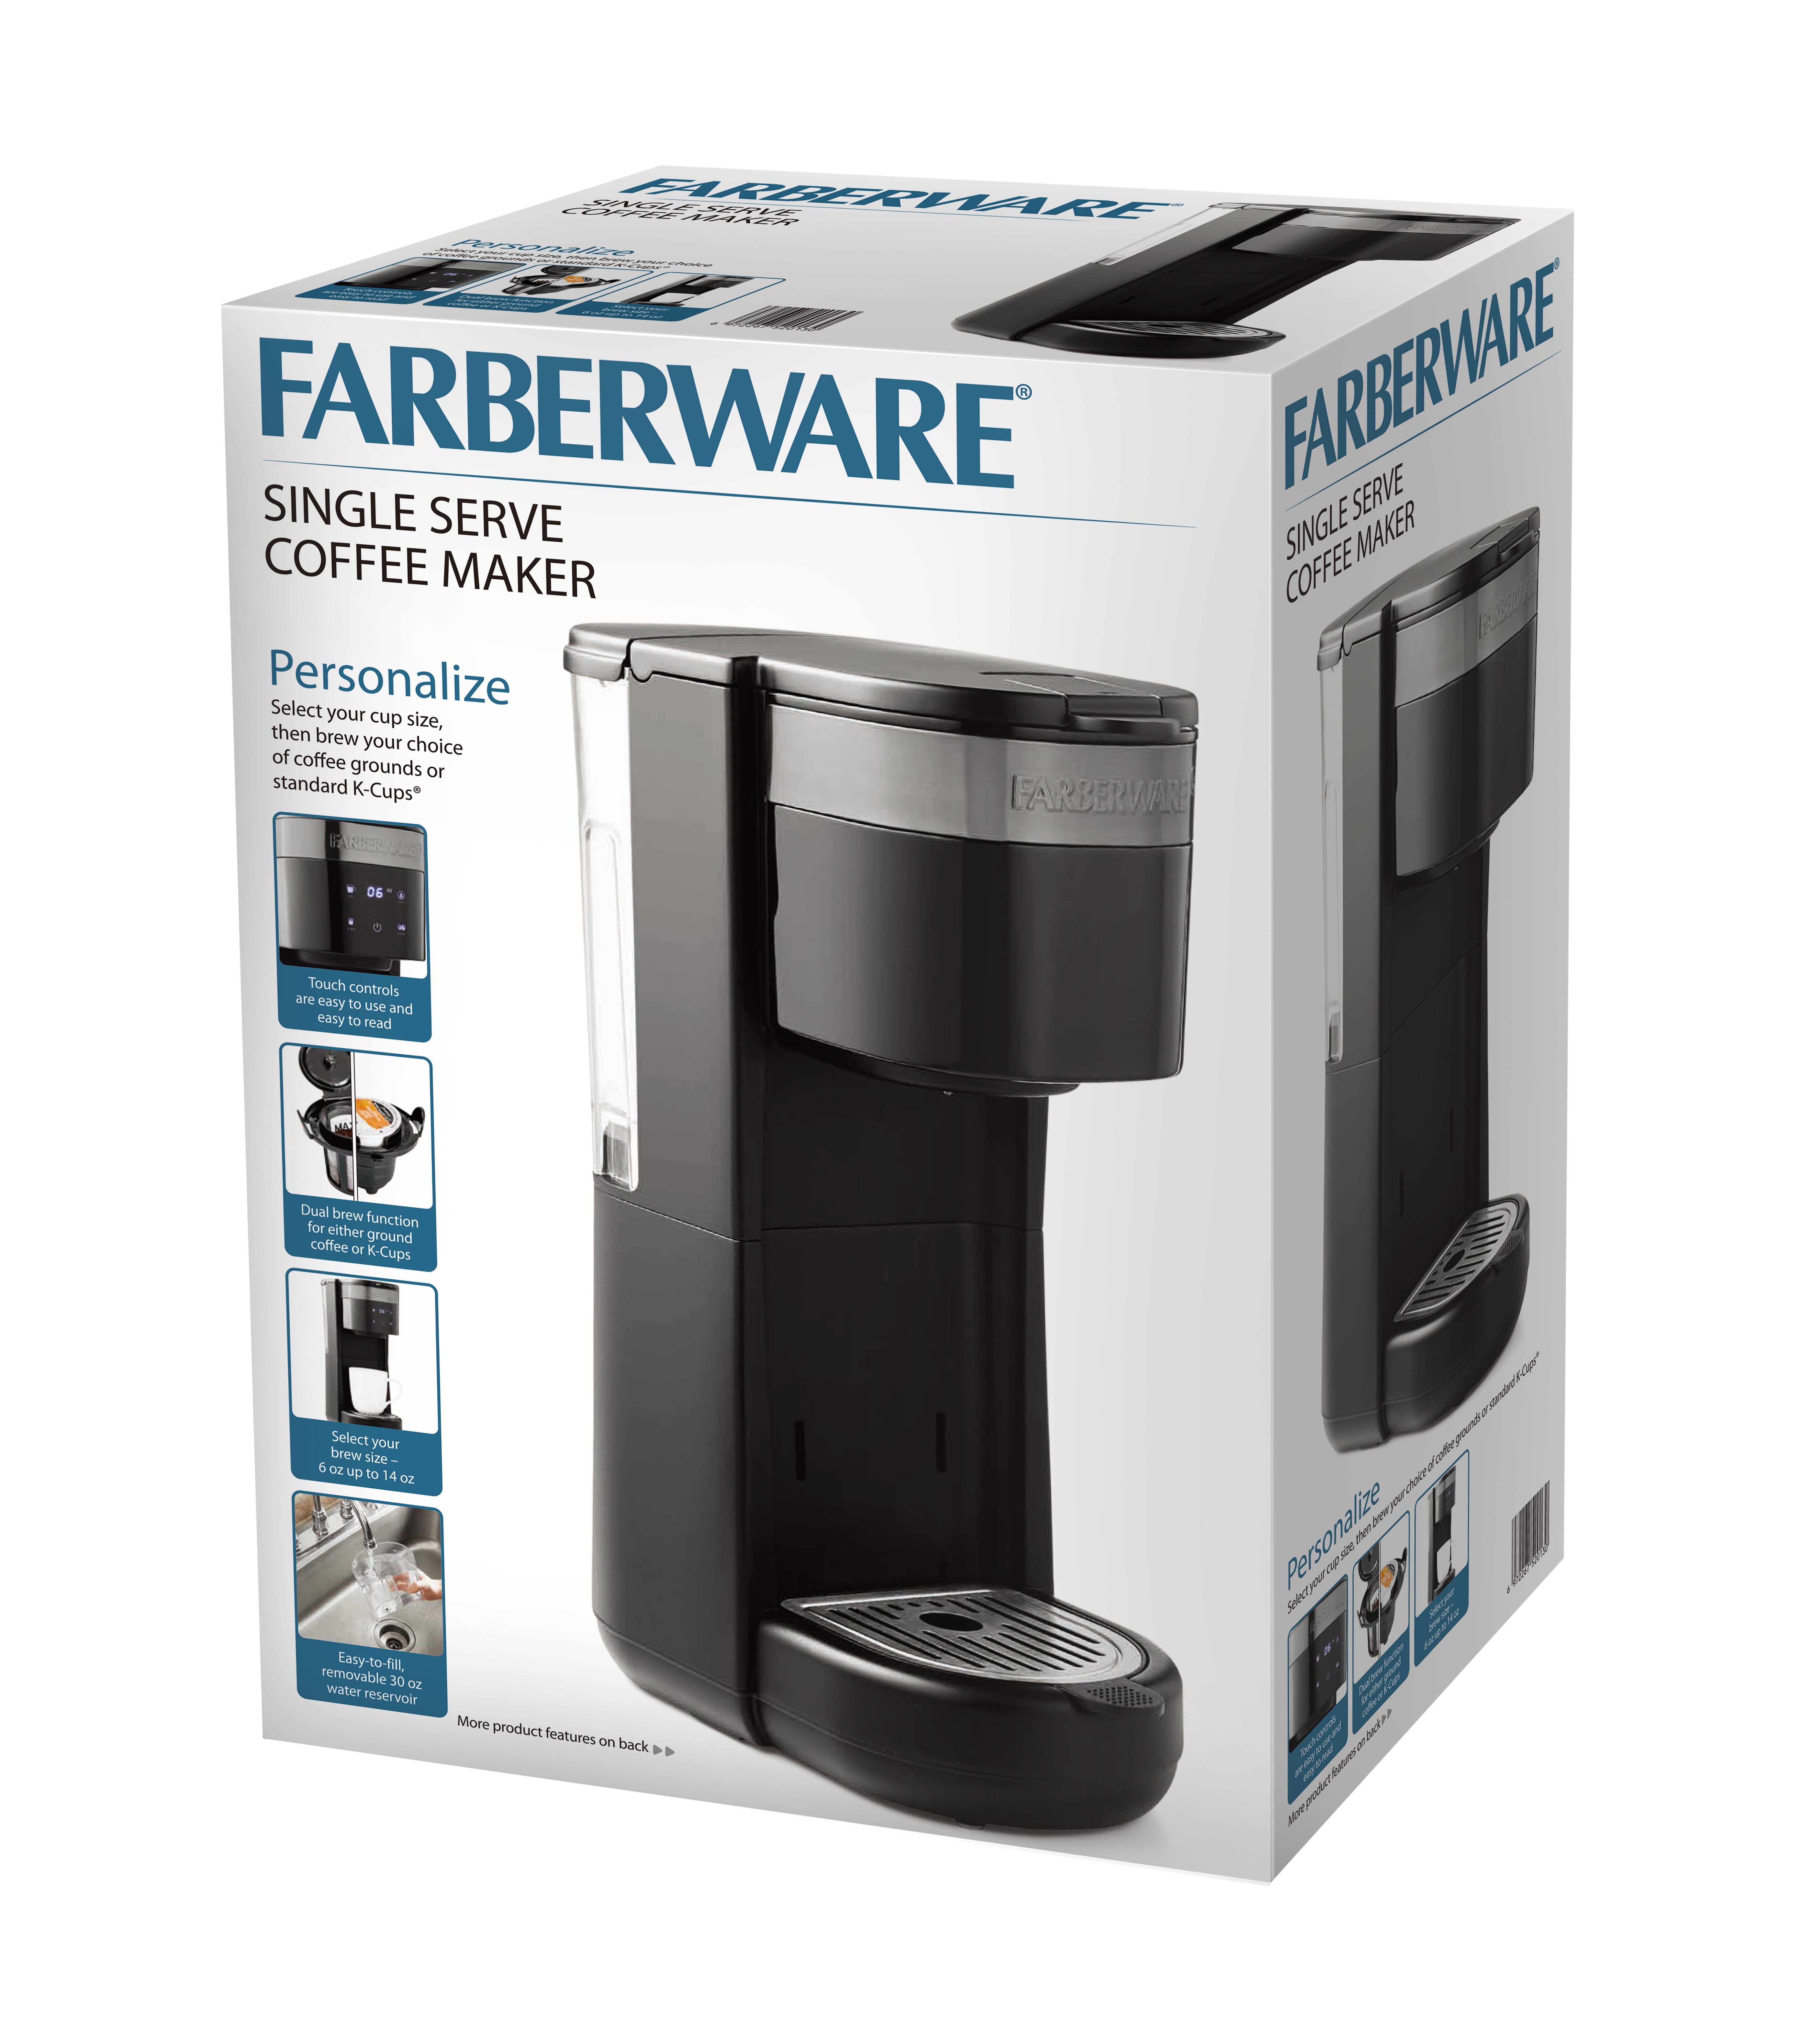 Farberware FW61100058108 4 in 1 Farberware Electric Milk Frother